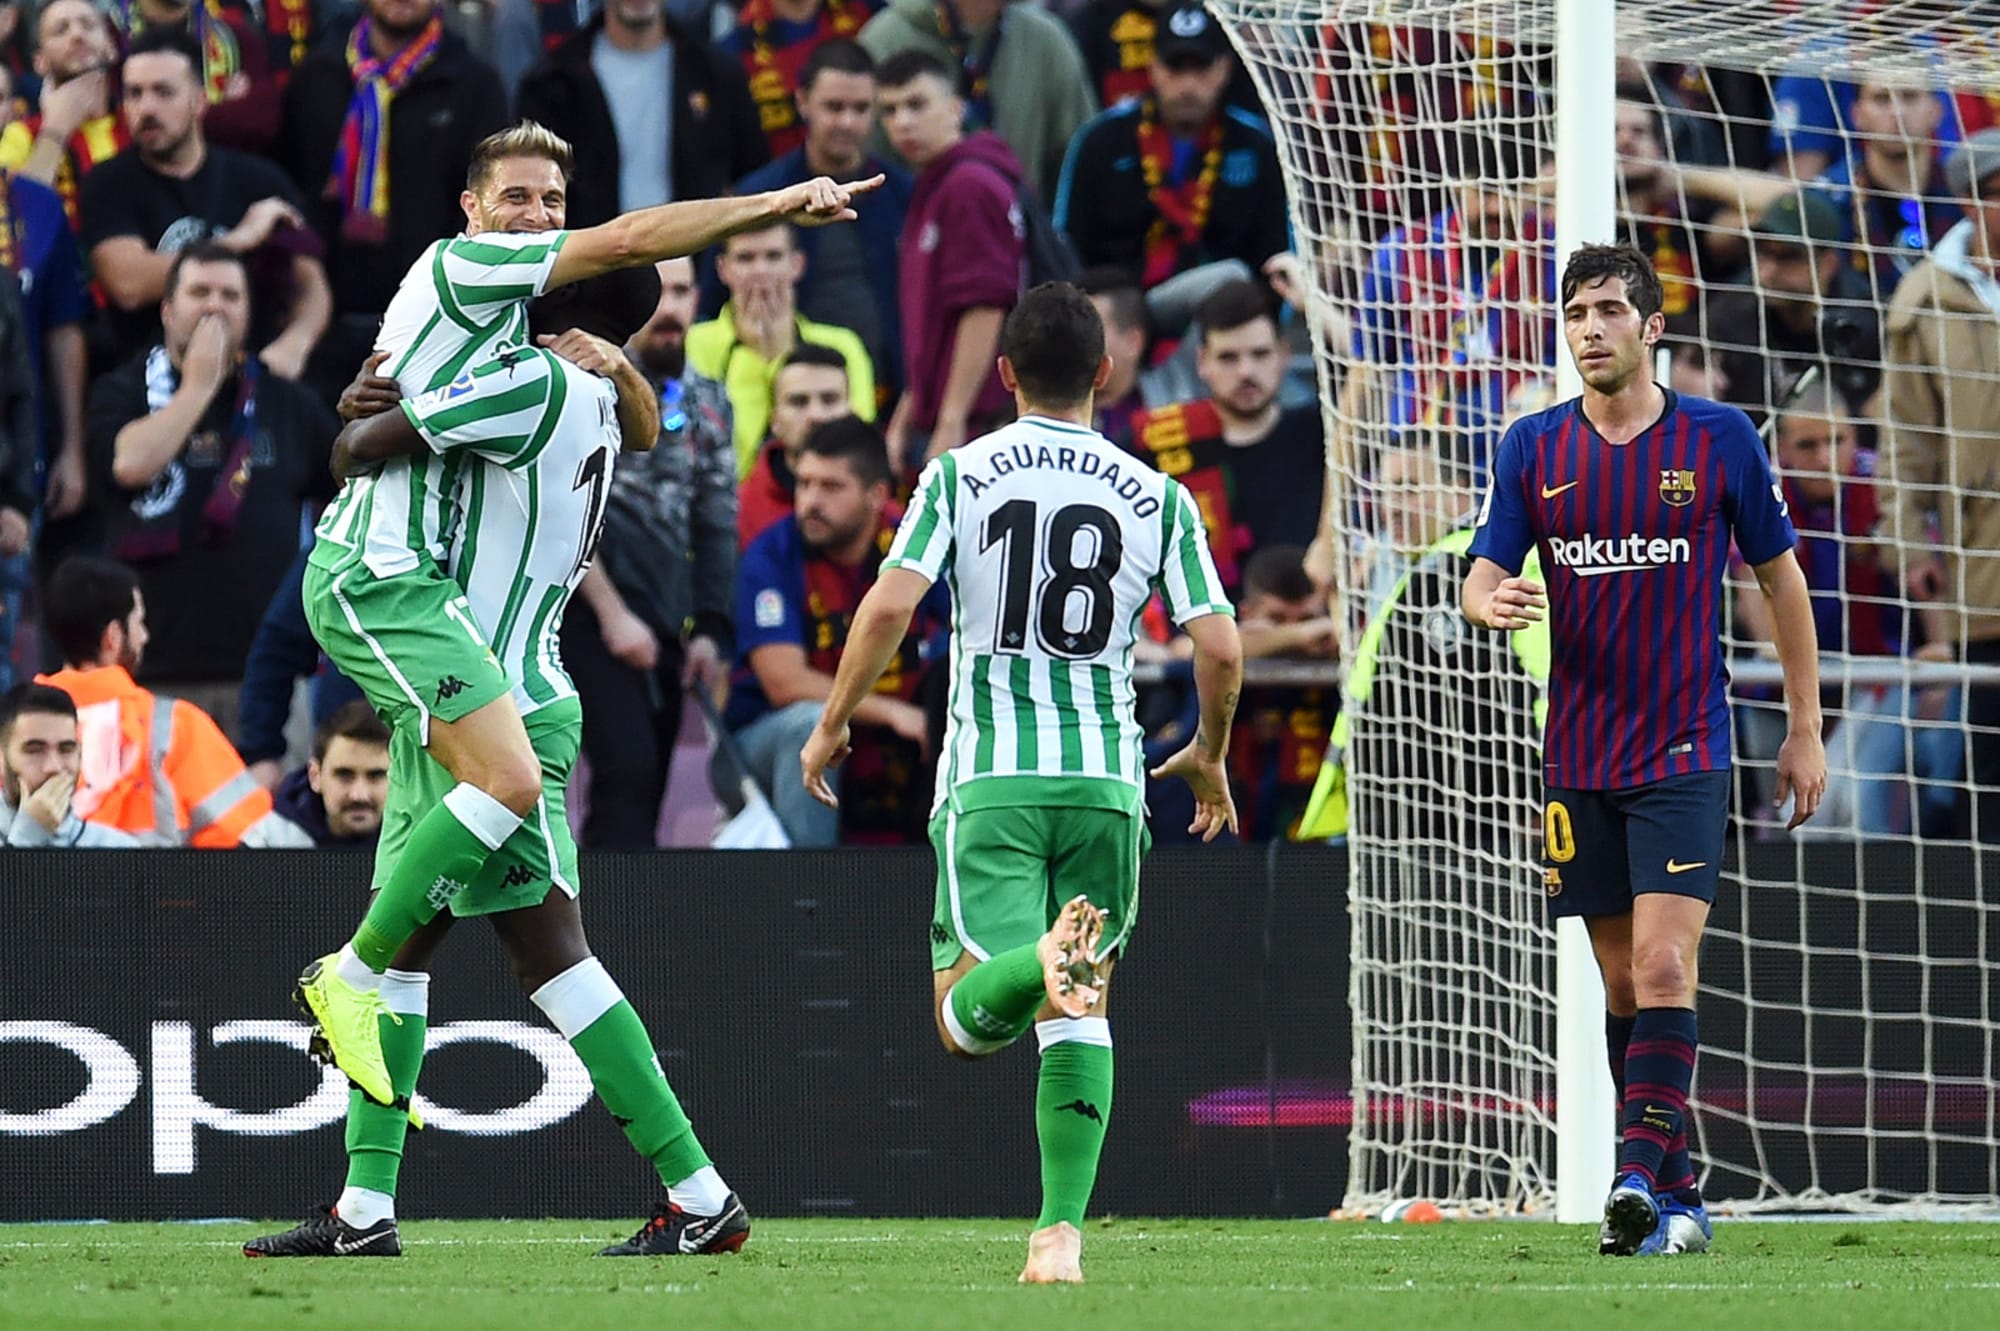 10-man Barcelona lose 4-3 to dominant Real Betis at the Camp Nou